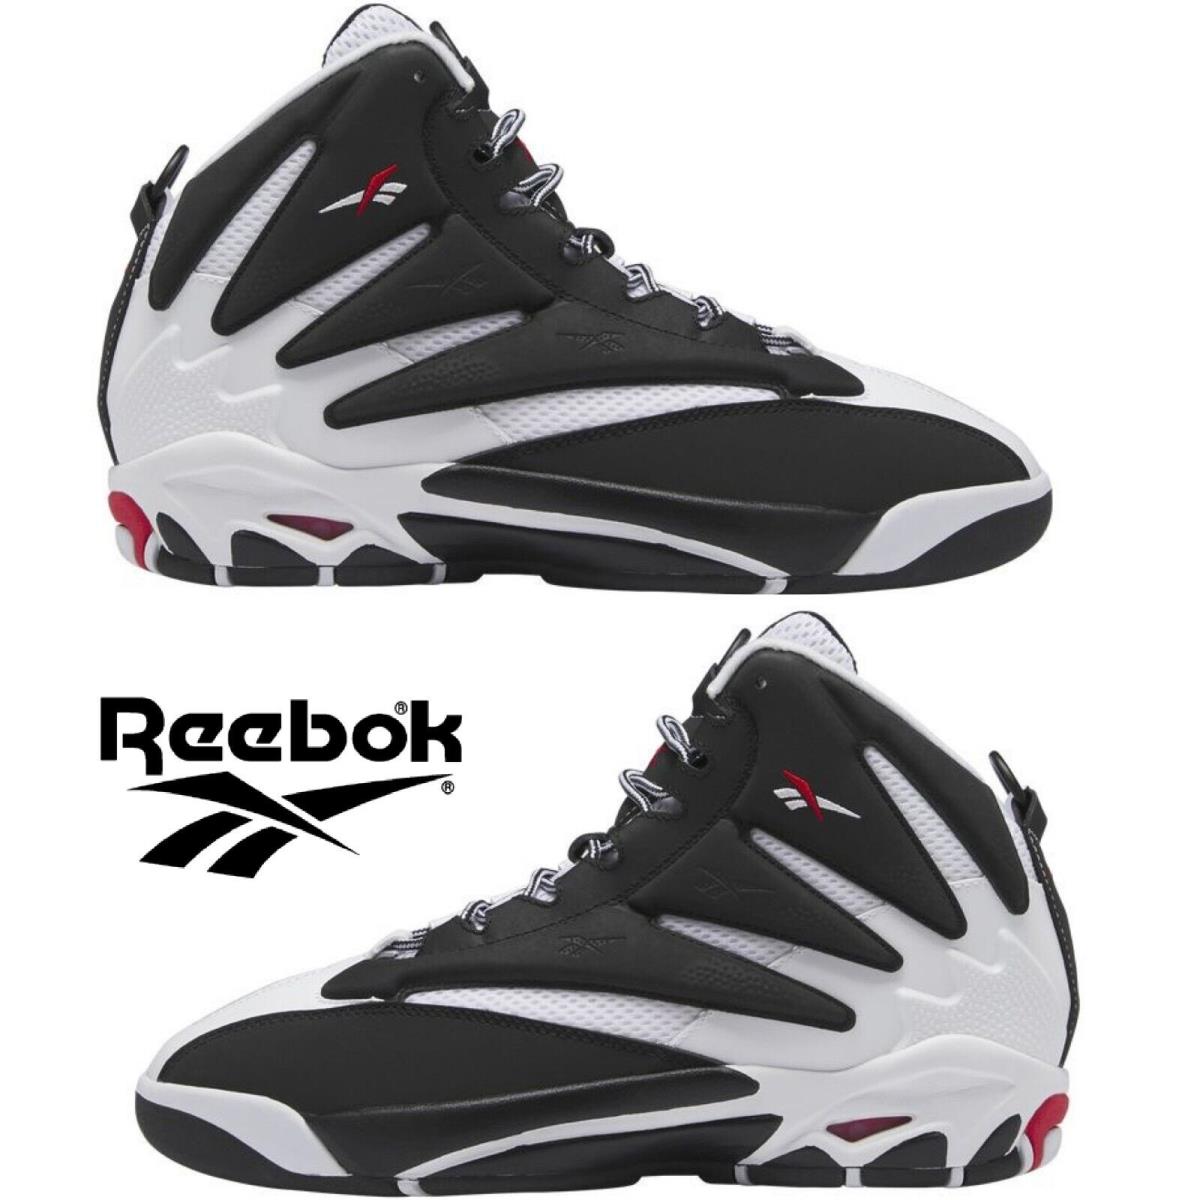 Reebok The Blast Basketball Shoes Men`s Sneakers Running Casual Sport Retro